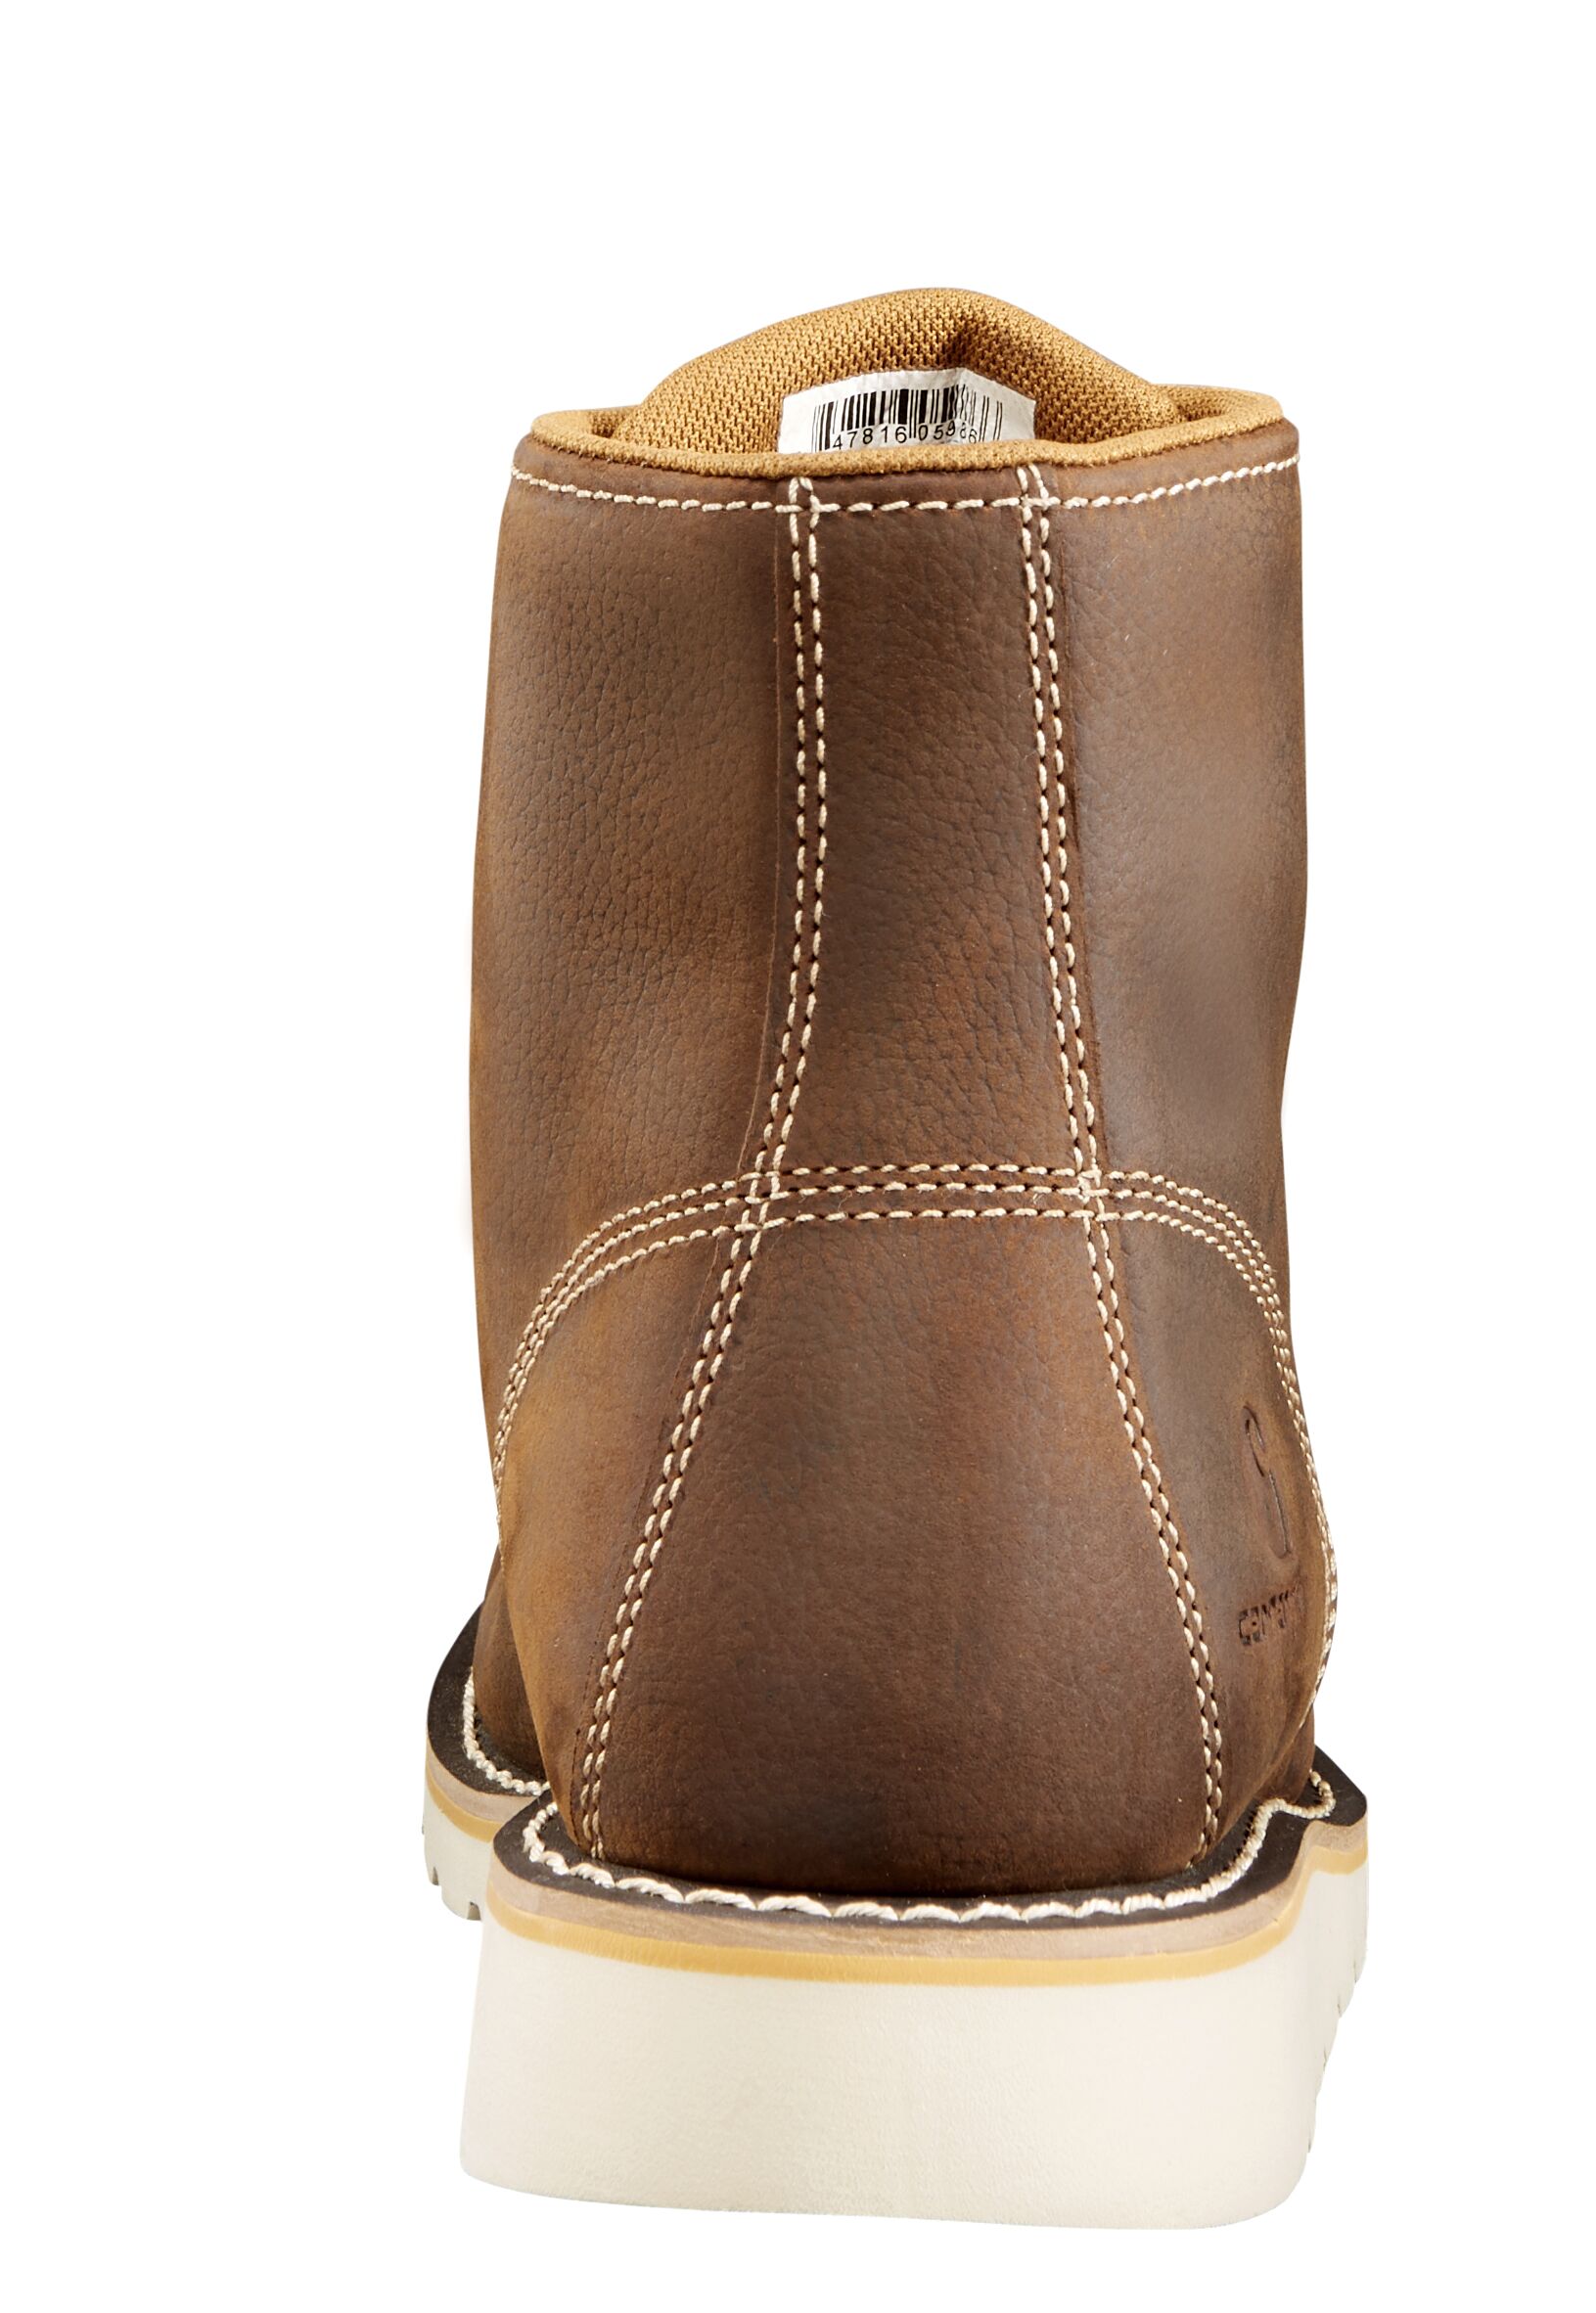 Men's 6" Waterproof Soft Toe Wedge Brown Boot